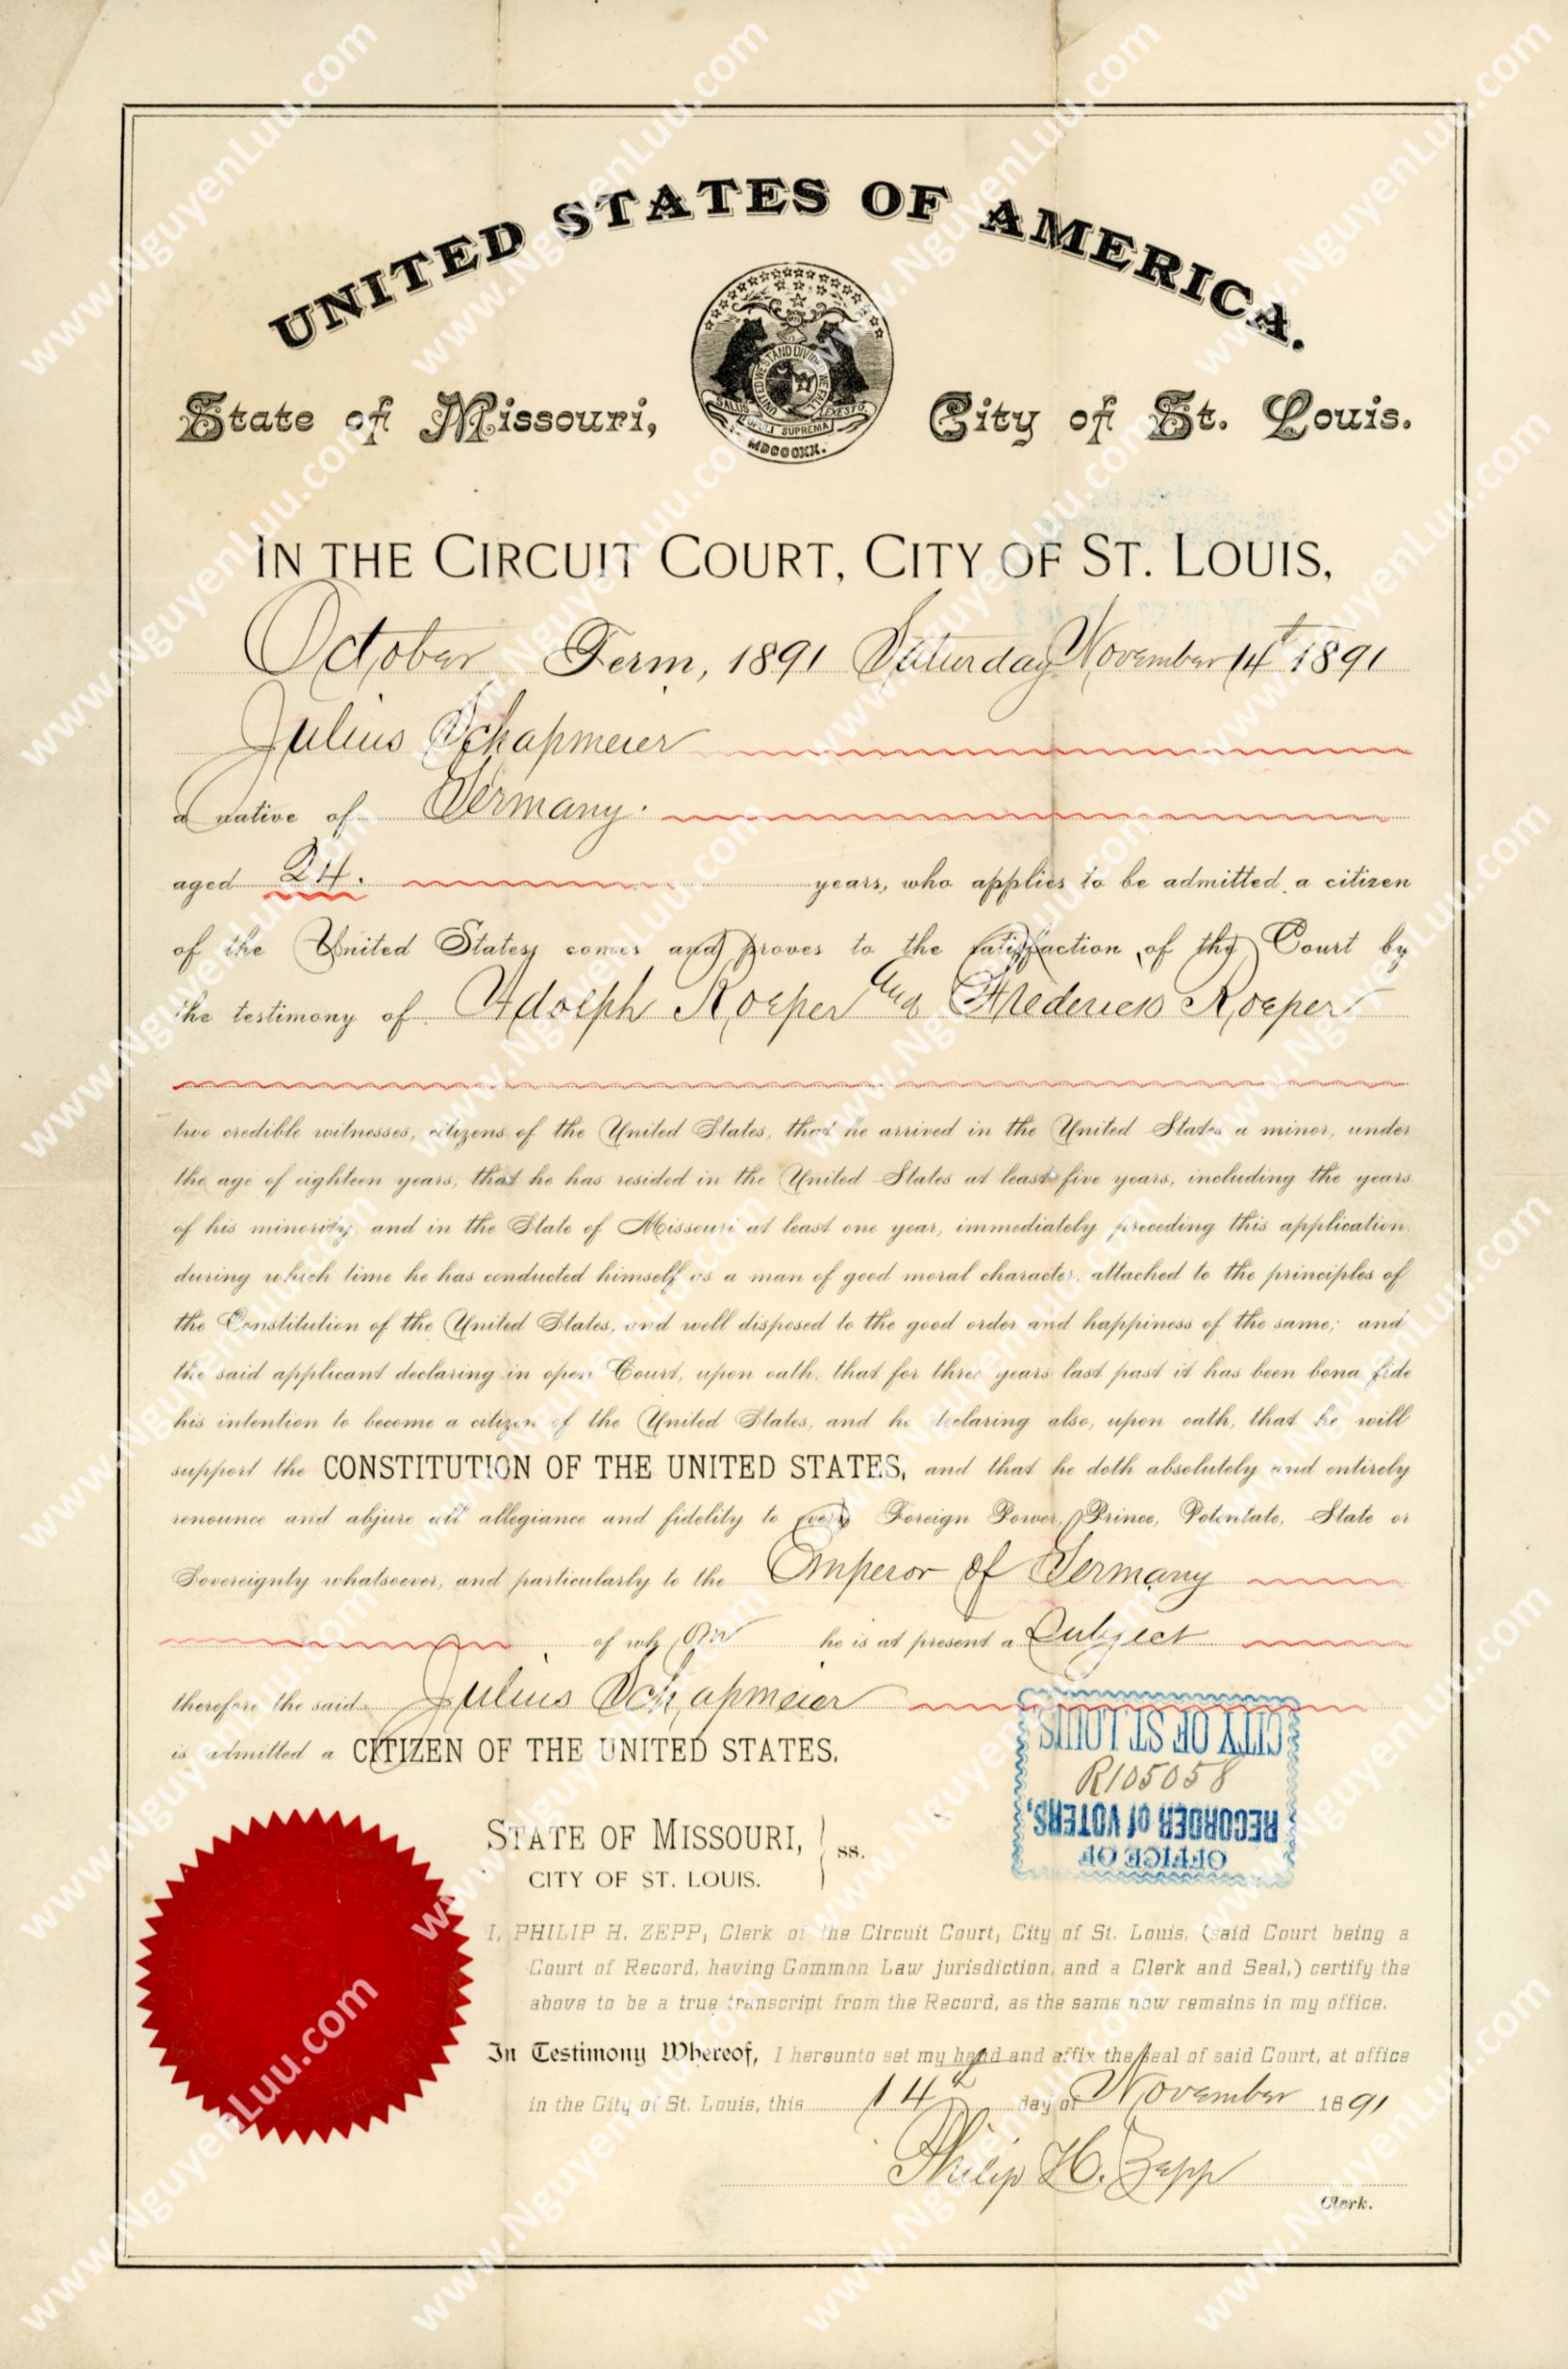 U.S. Certificate of Naturalization issued in the State of Missouri in 1891